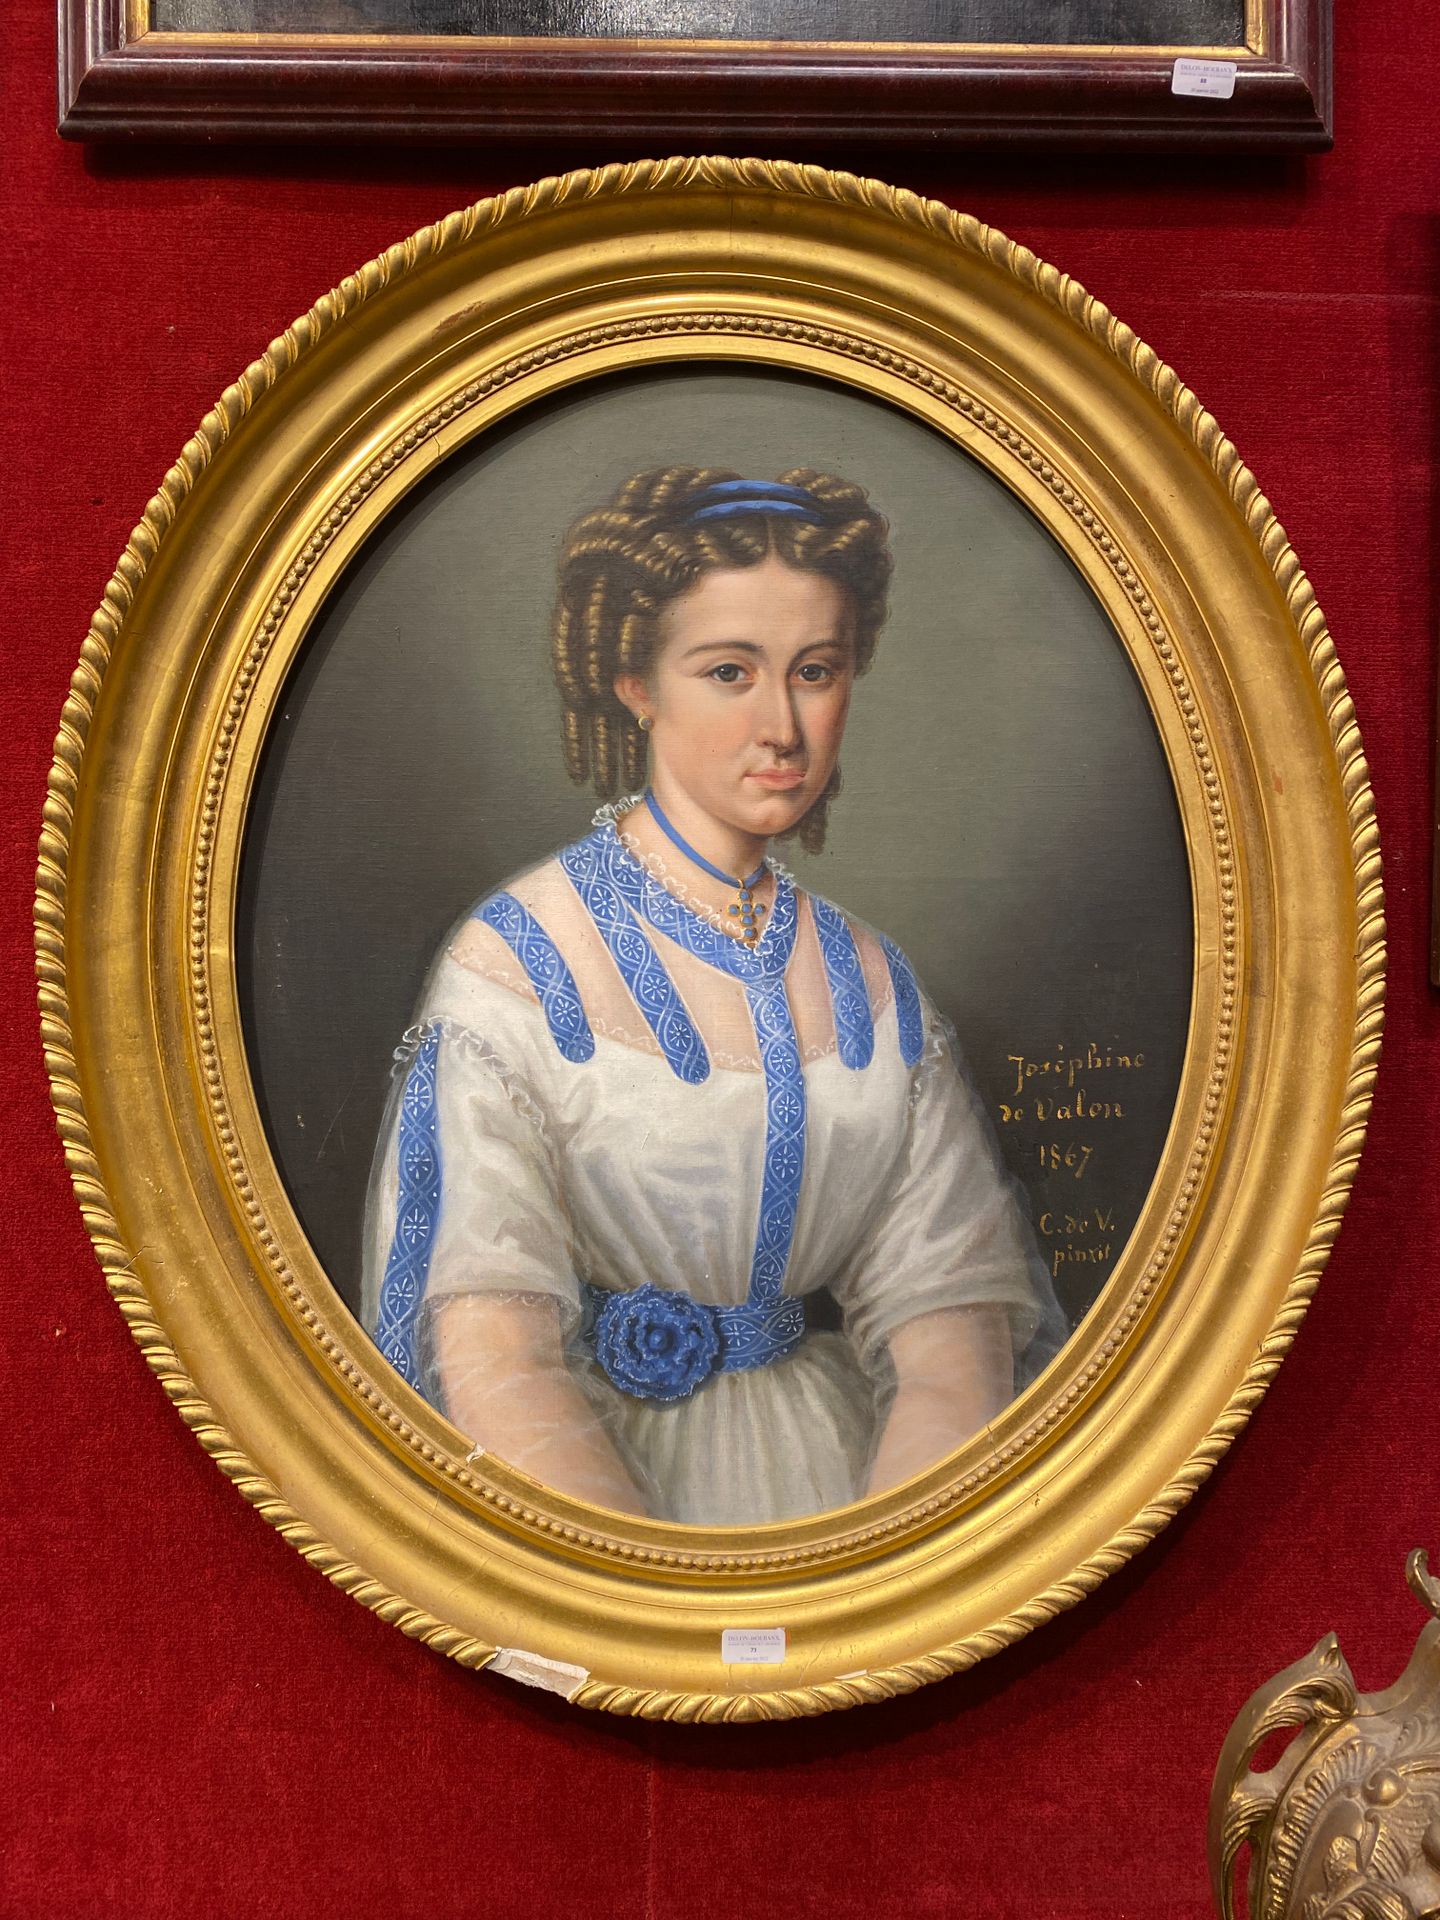 Null French School 1867

Portrait of Josephine de Valon

Oval canvas, on its ori&hellip;